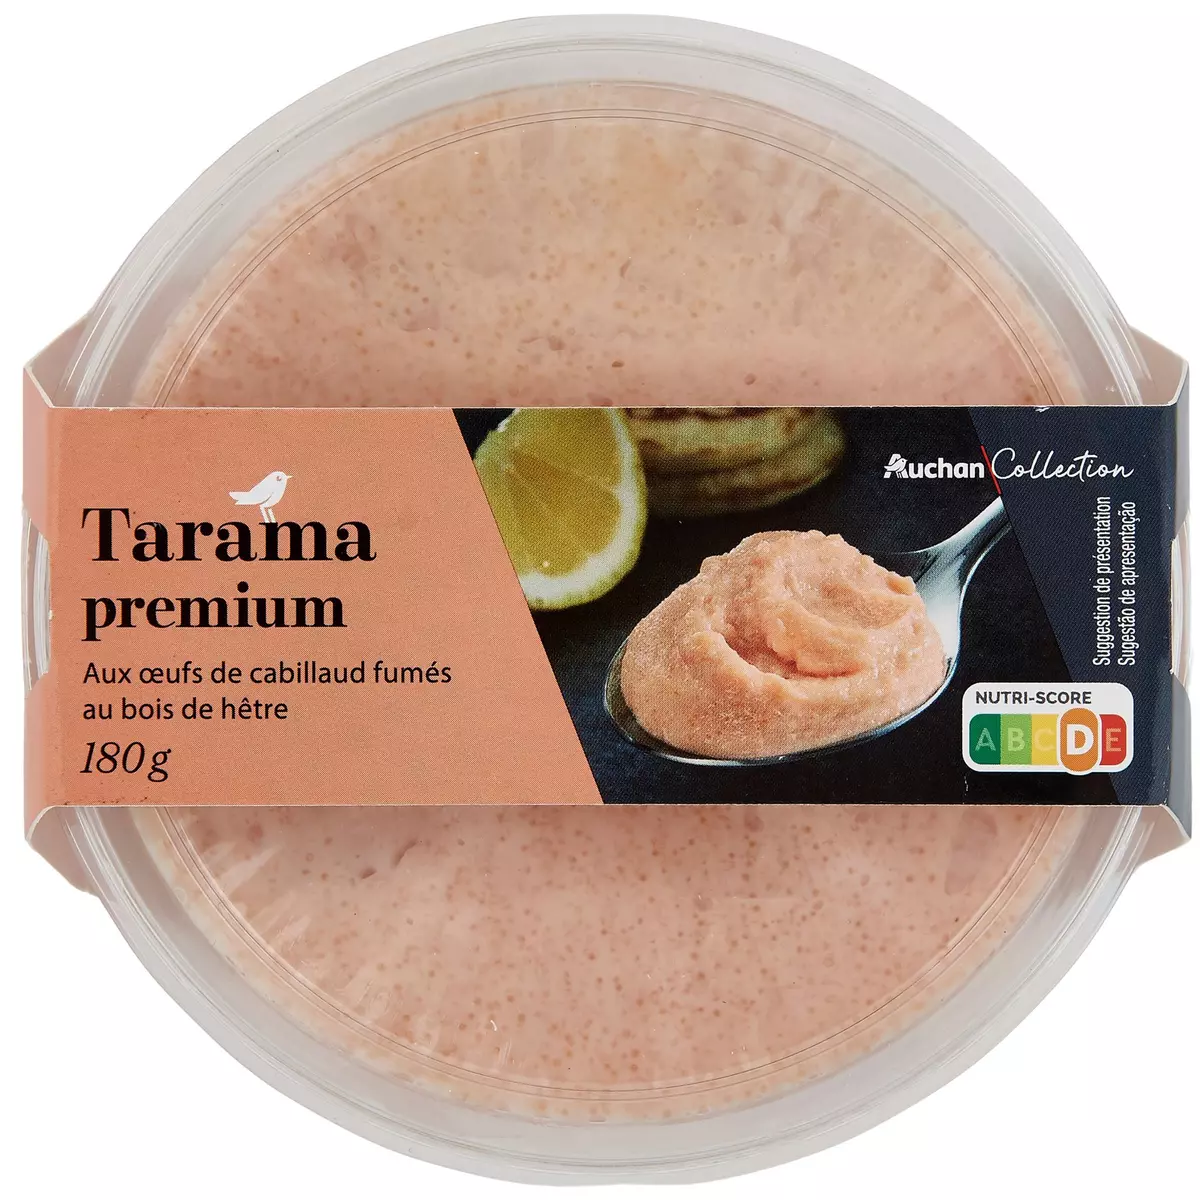 AUCHAN COLLECTION Tarama premium 180g